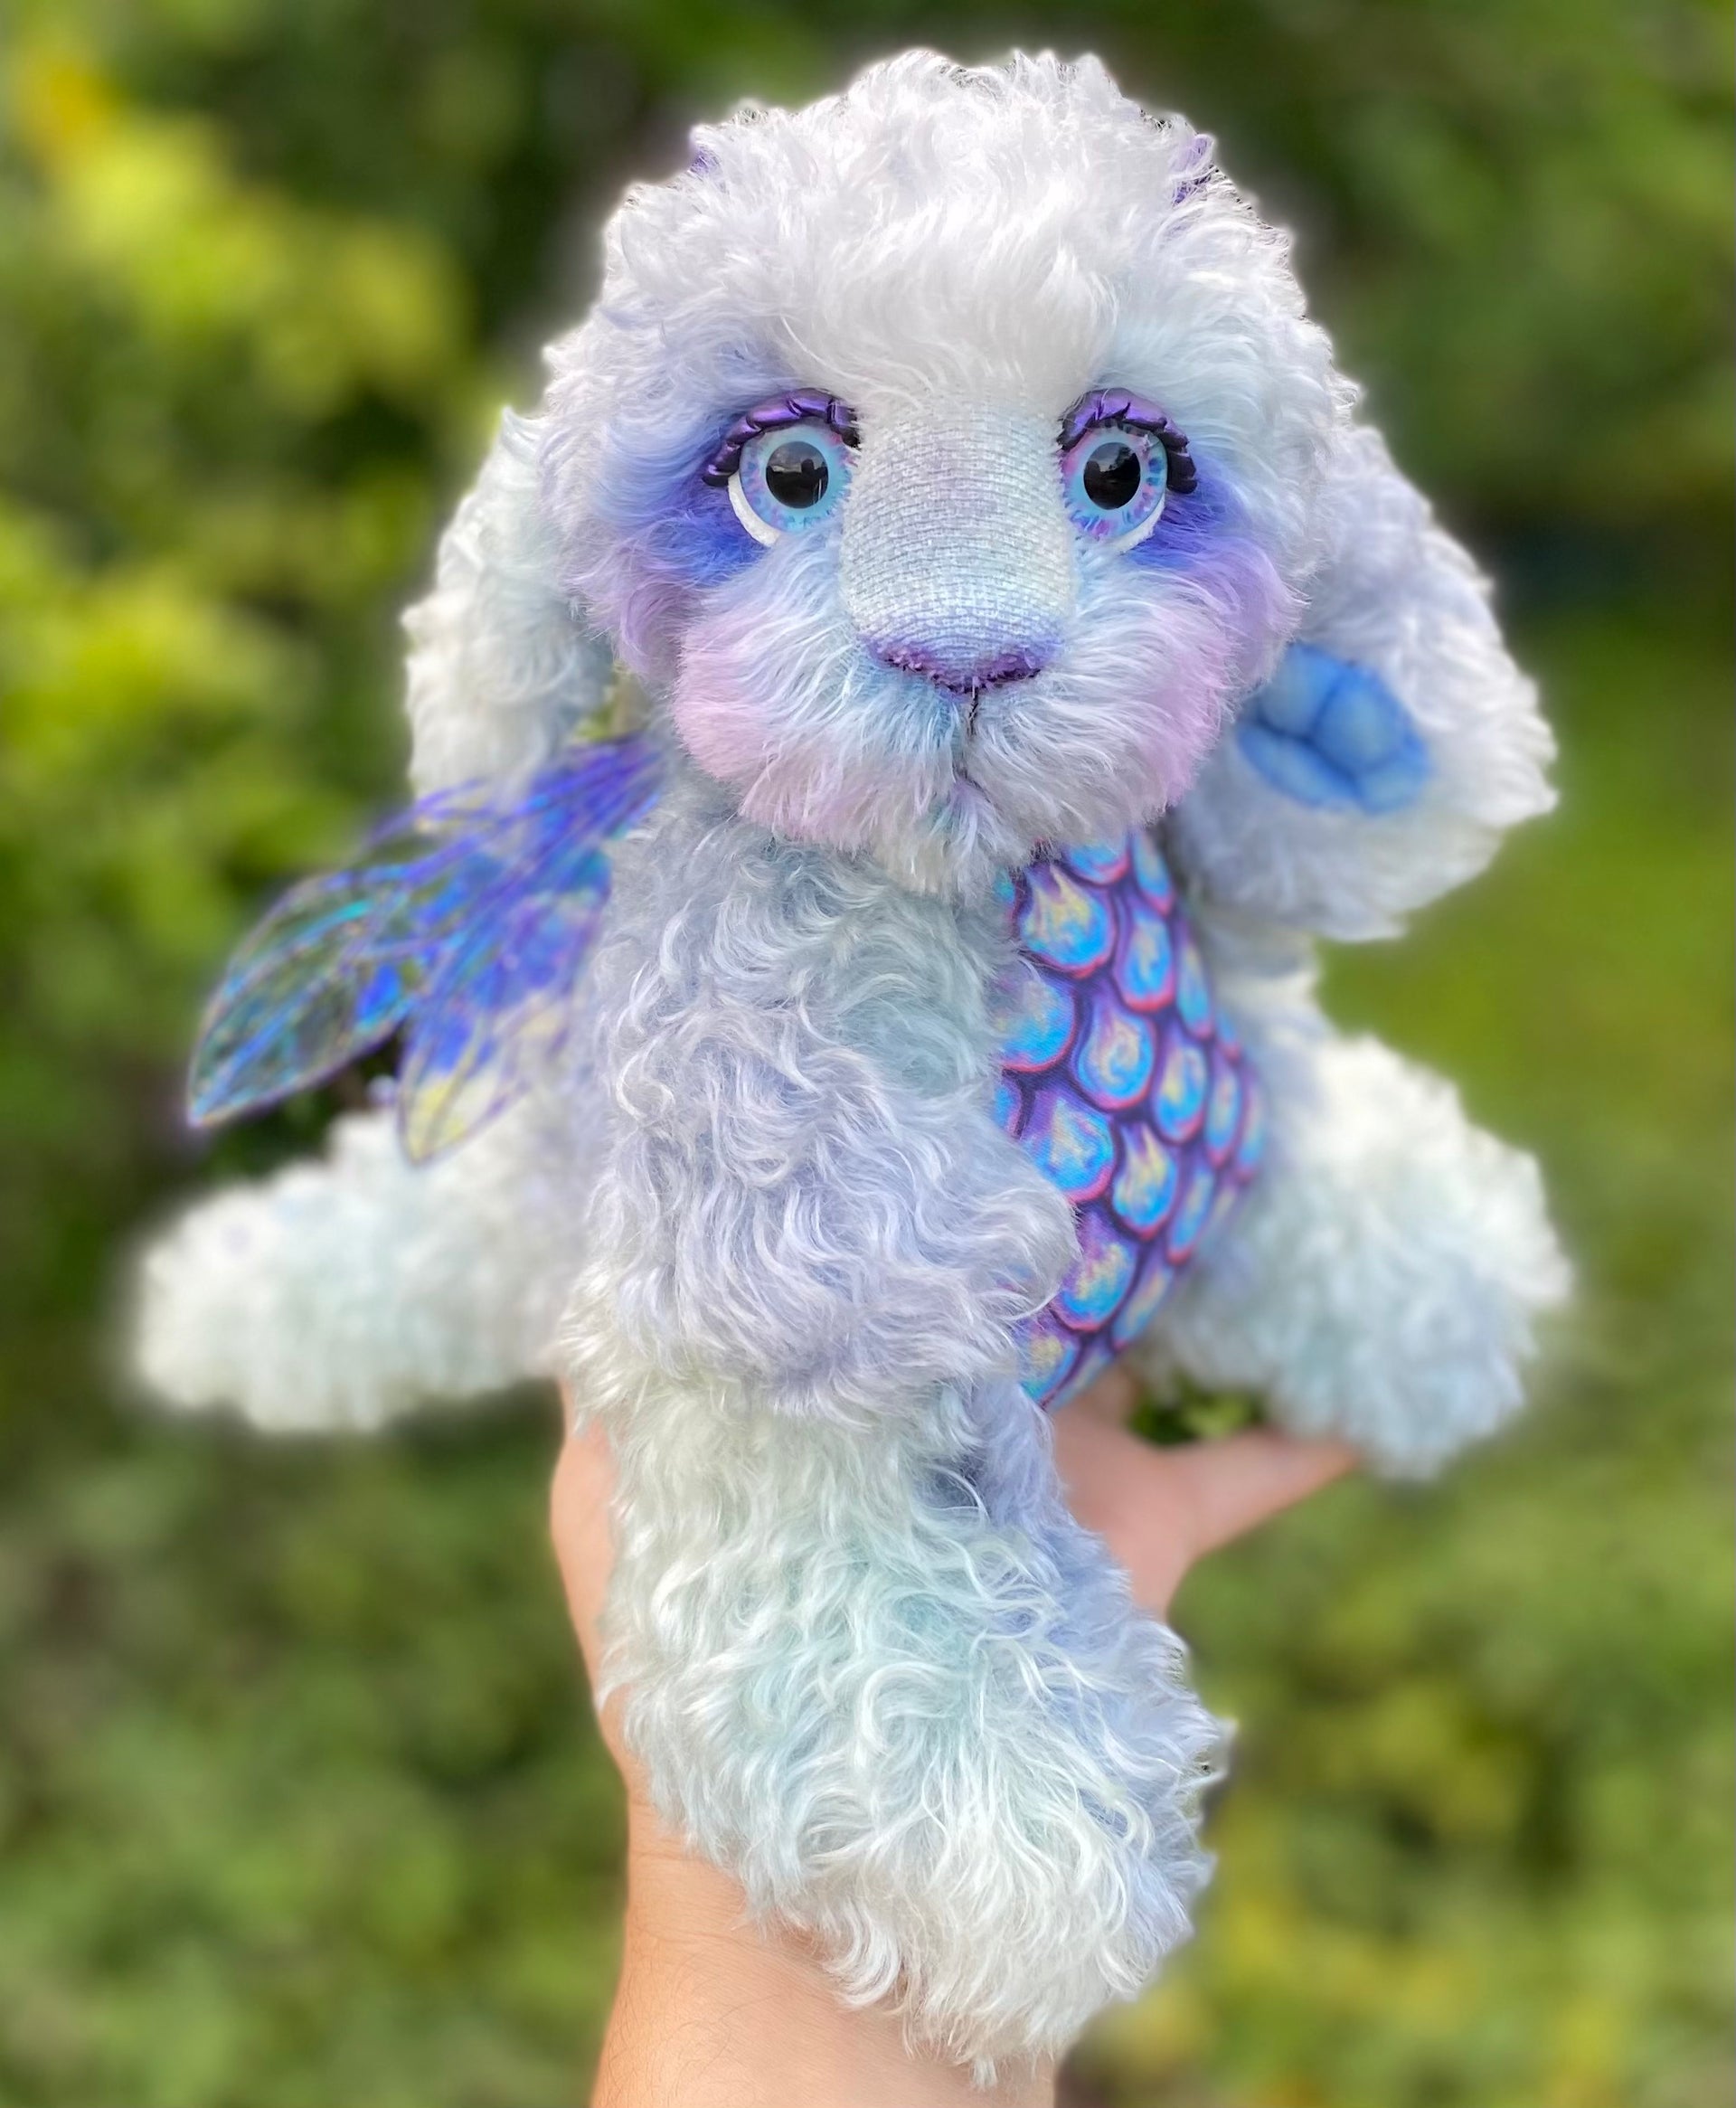 Custom Blue Baby Dragon - 12" kid mohair Artist Baby Dragon by Emmas Bears - OOAK